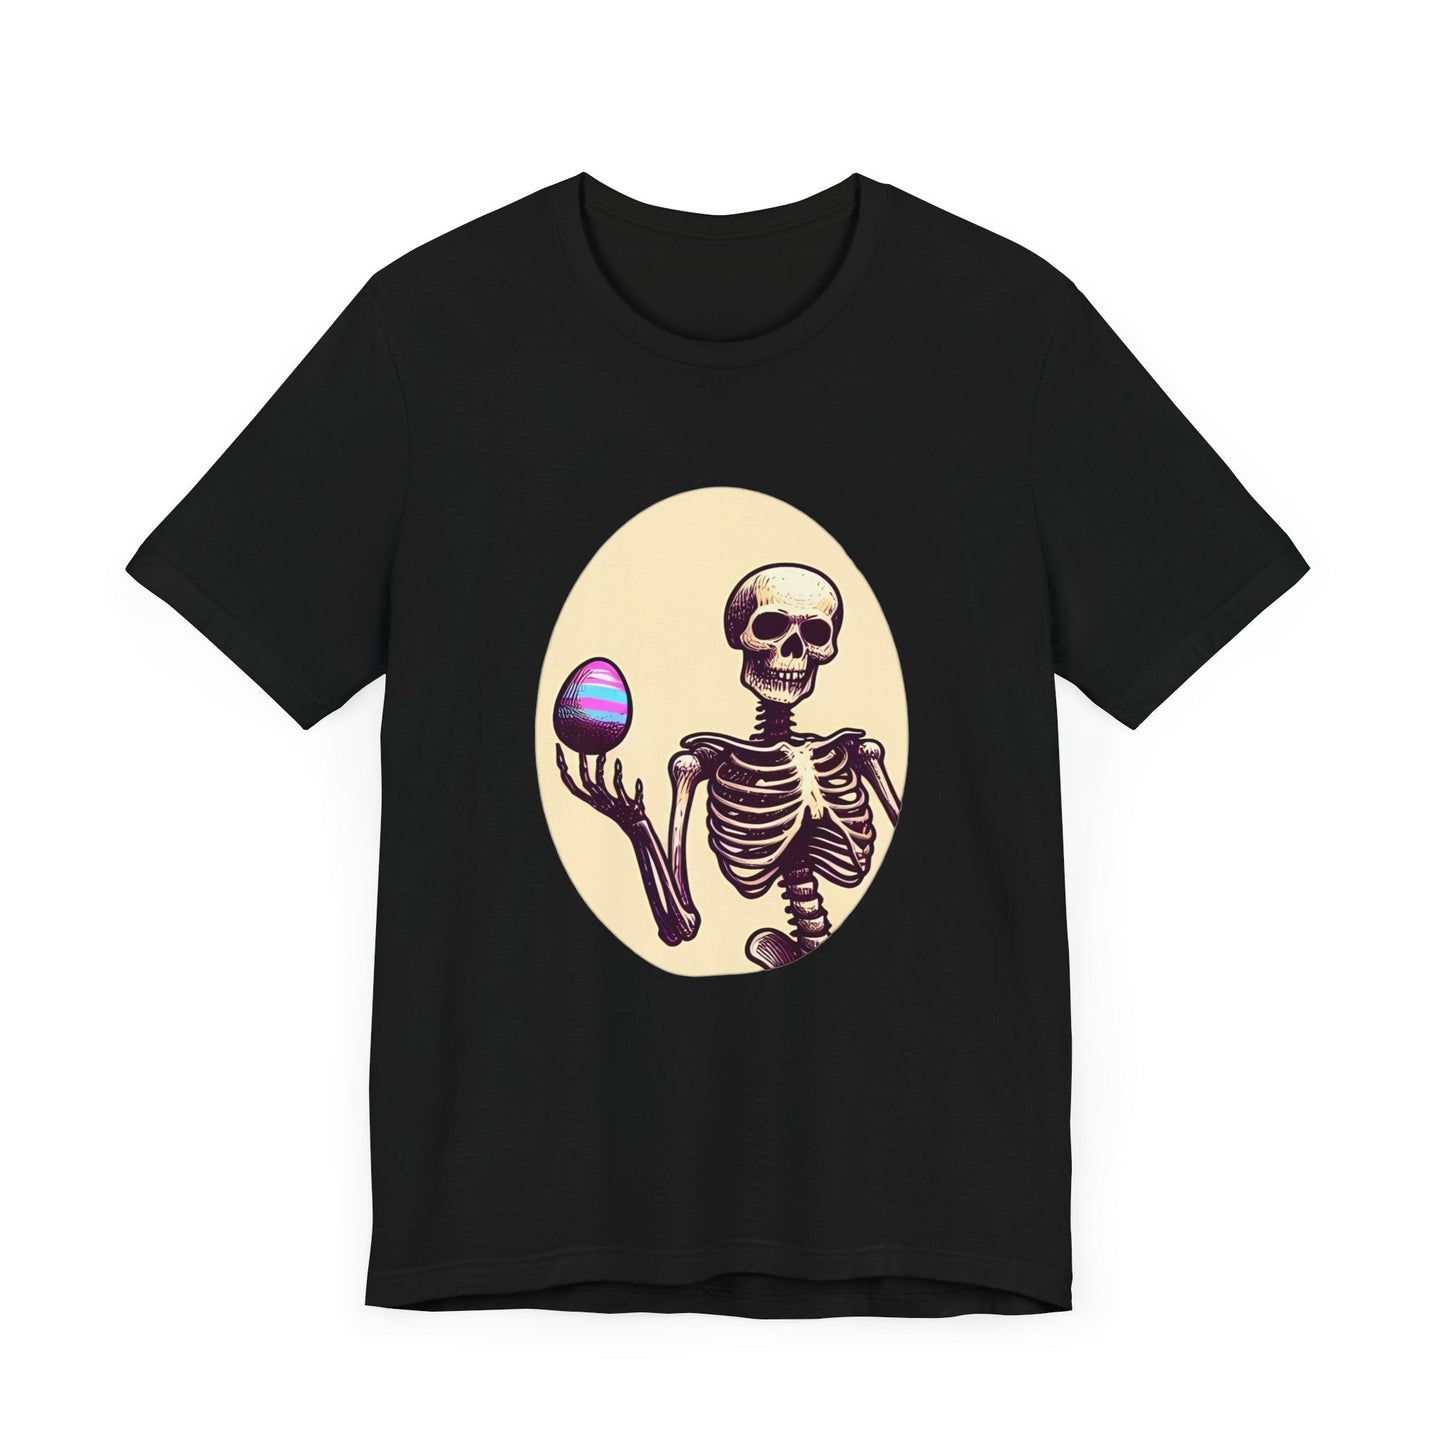 Skeleton With Easter Egg Short Sleeve Tee ShirtT - ShirtVTZdesignsBlackXSCottonCrew neckDTG